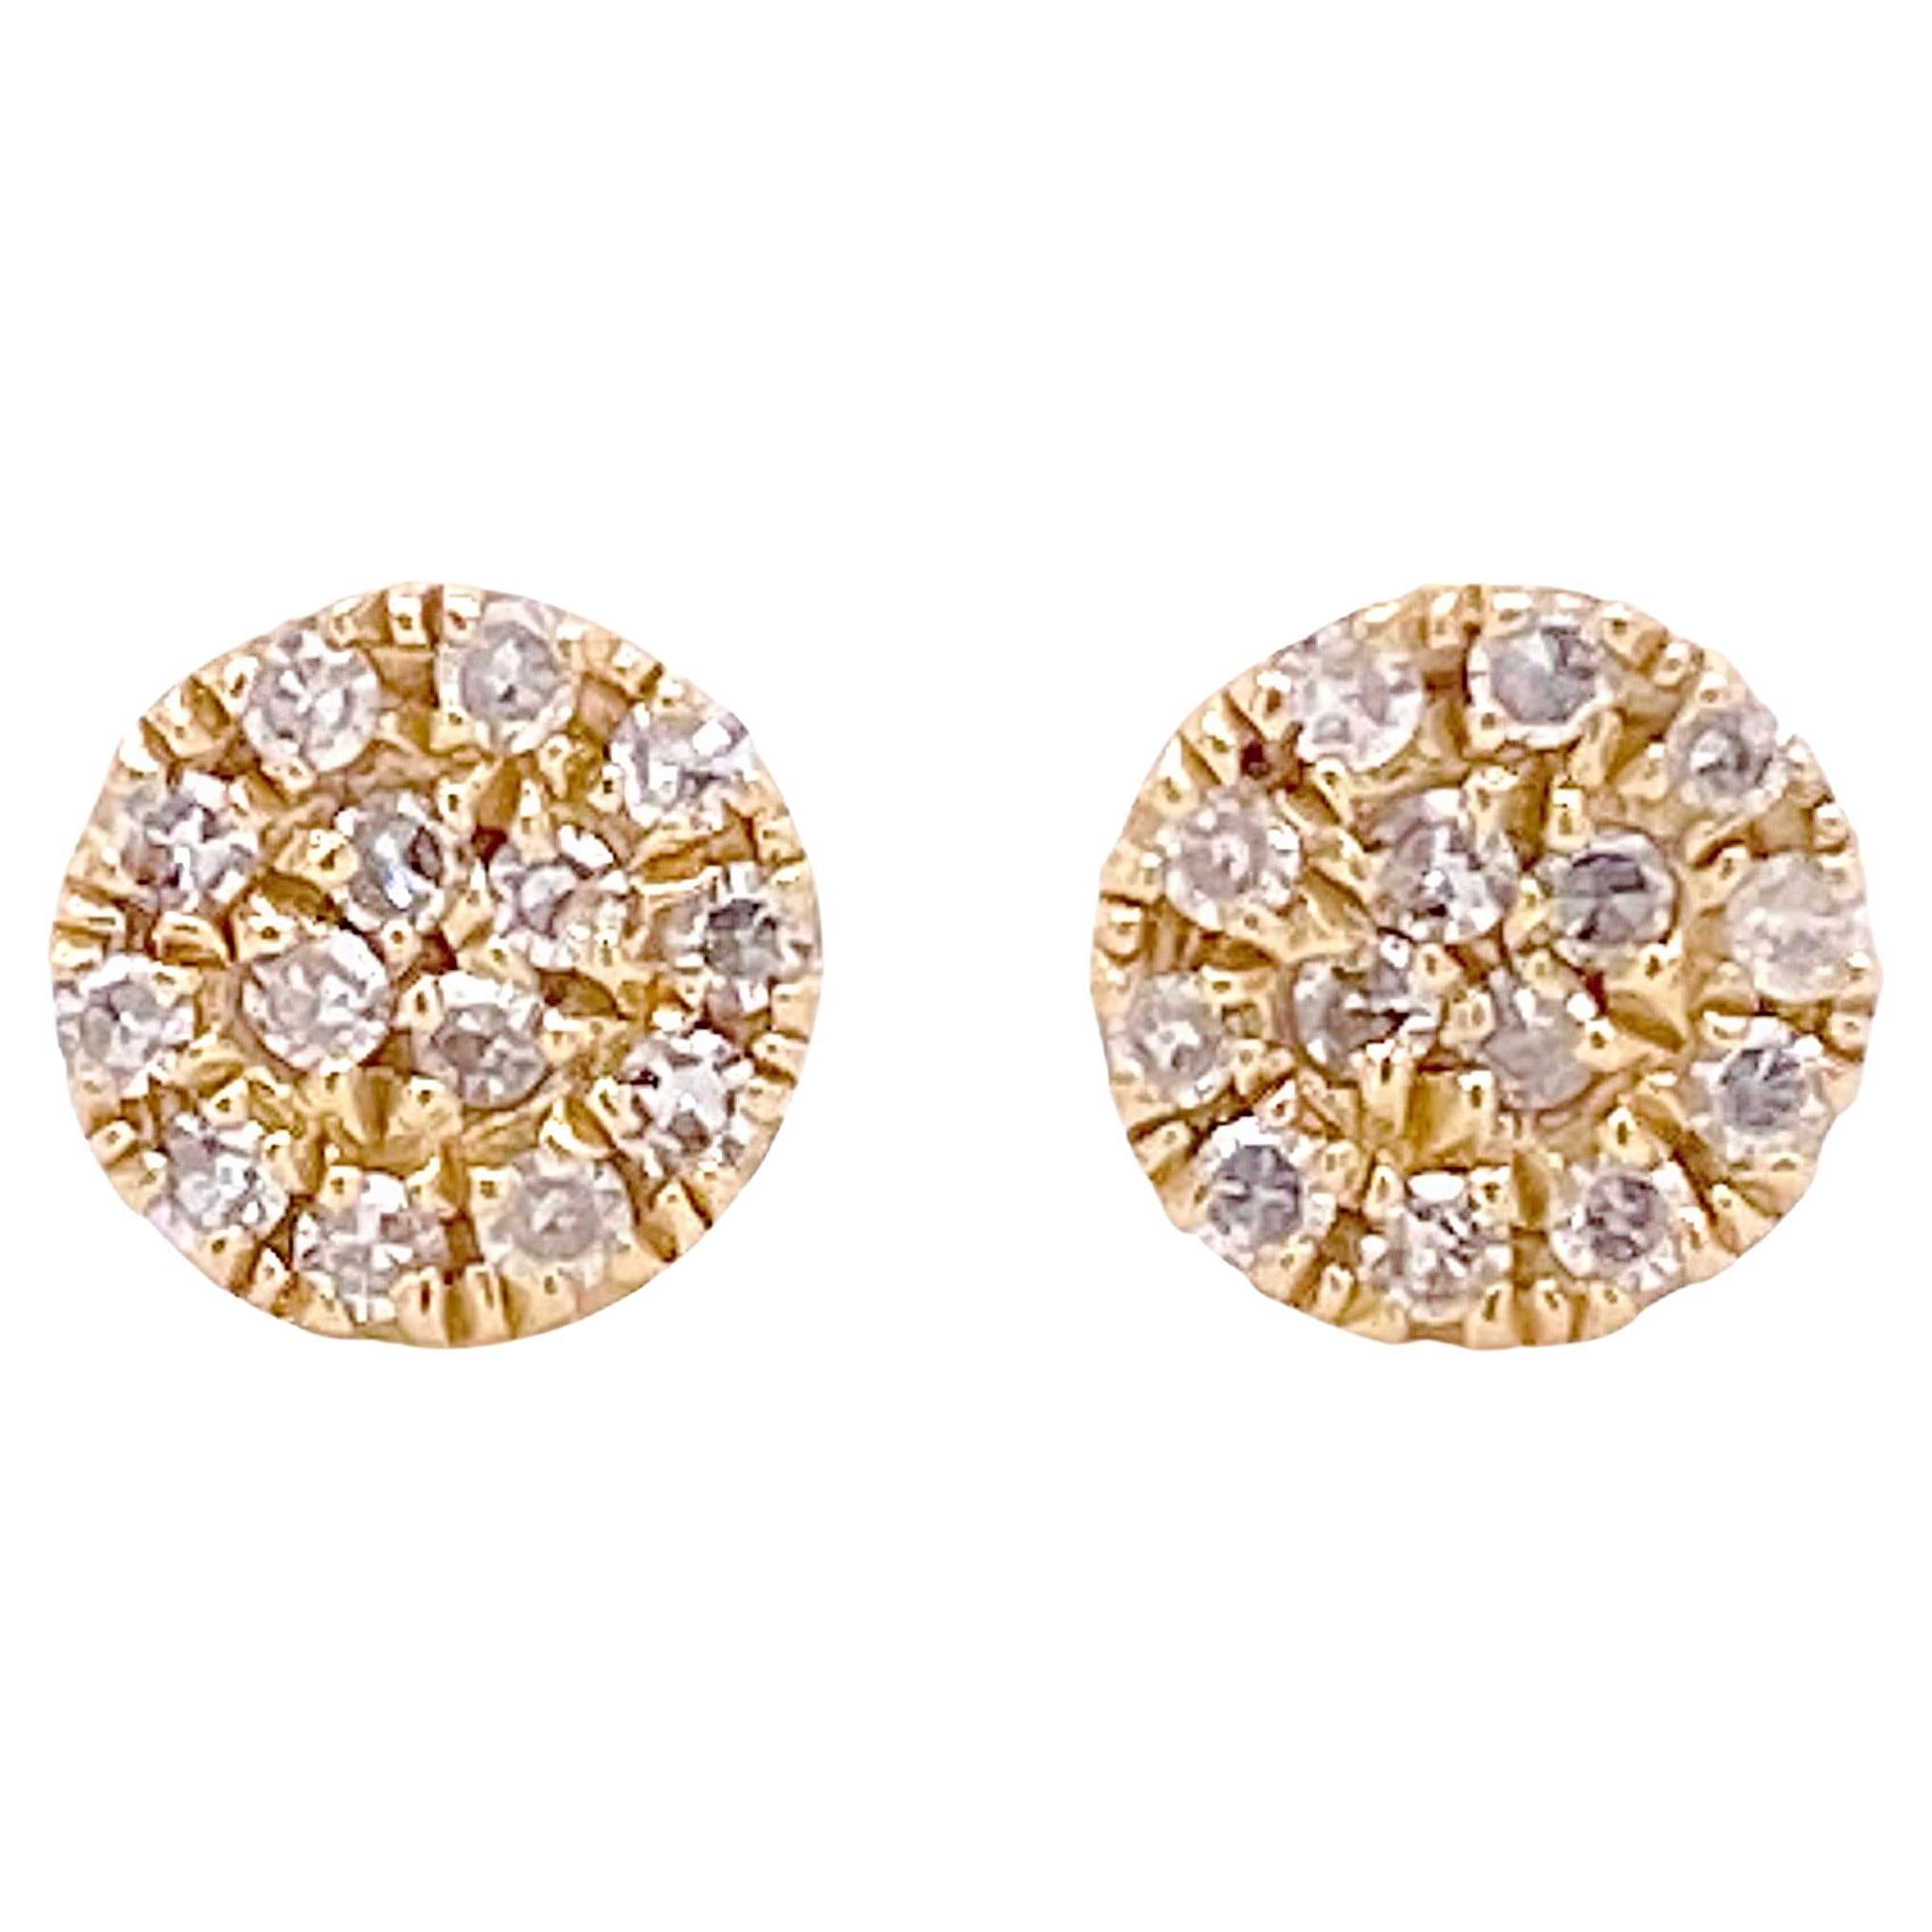 Diamond Studs Earrings w 28 Pave Diamonds in Round Disk